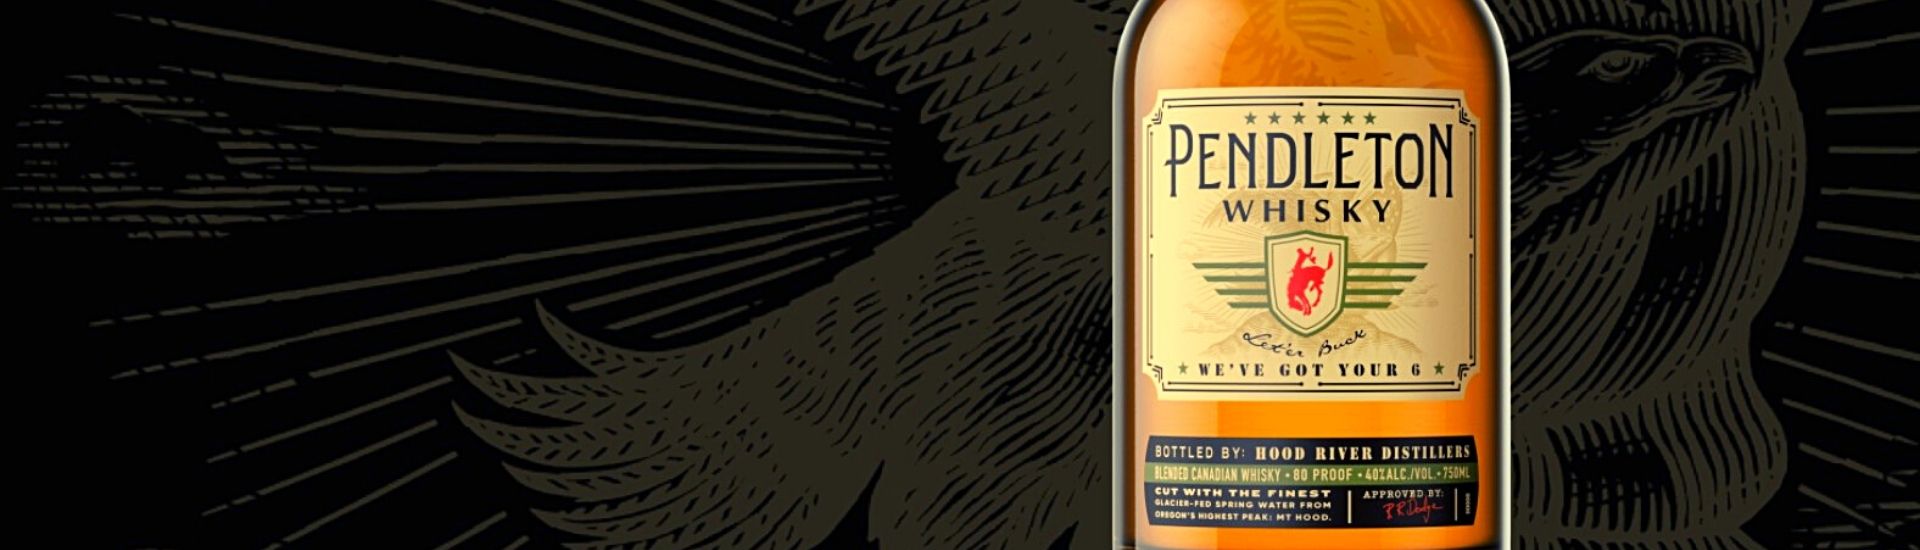 pendleton whiskey bottle on table